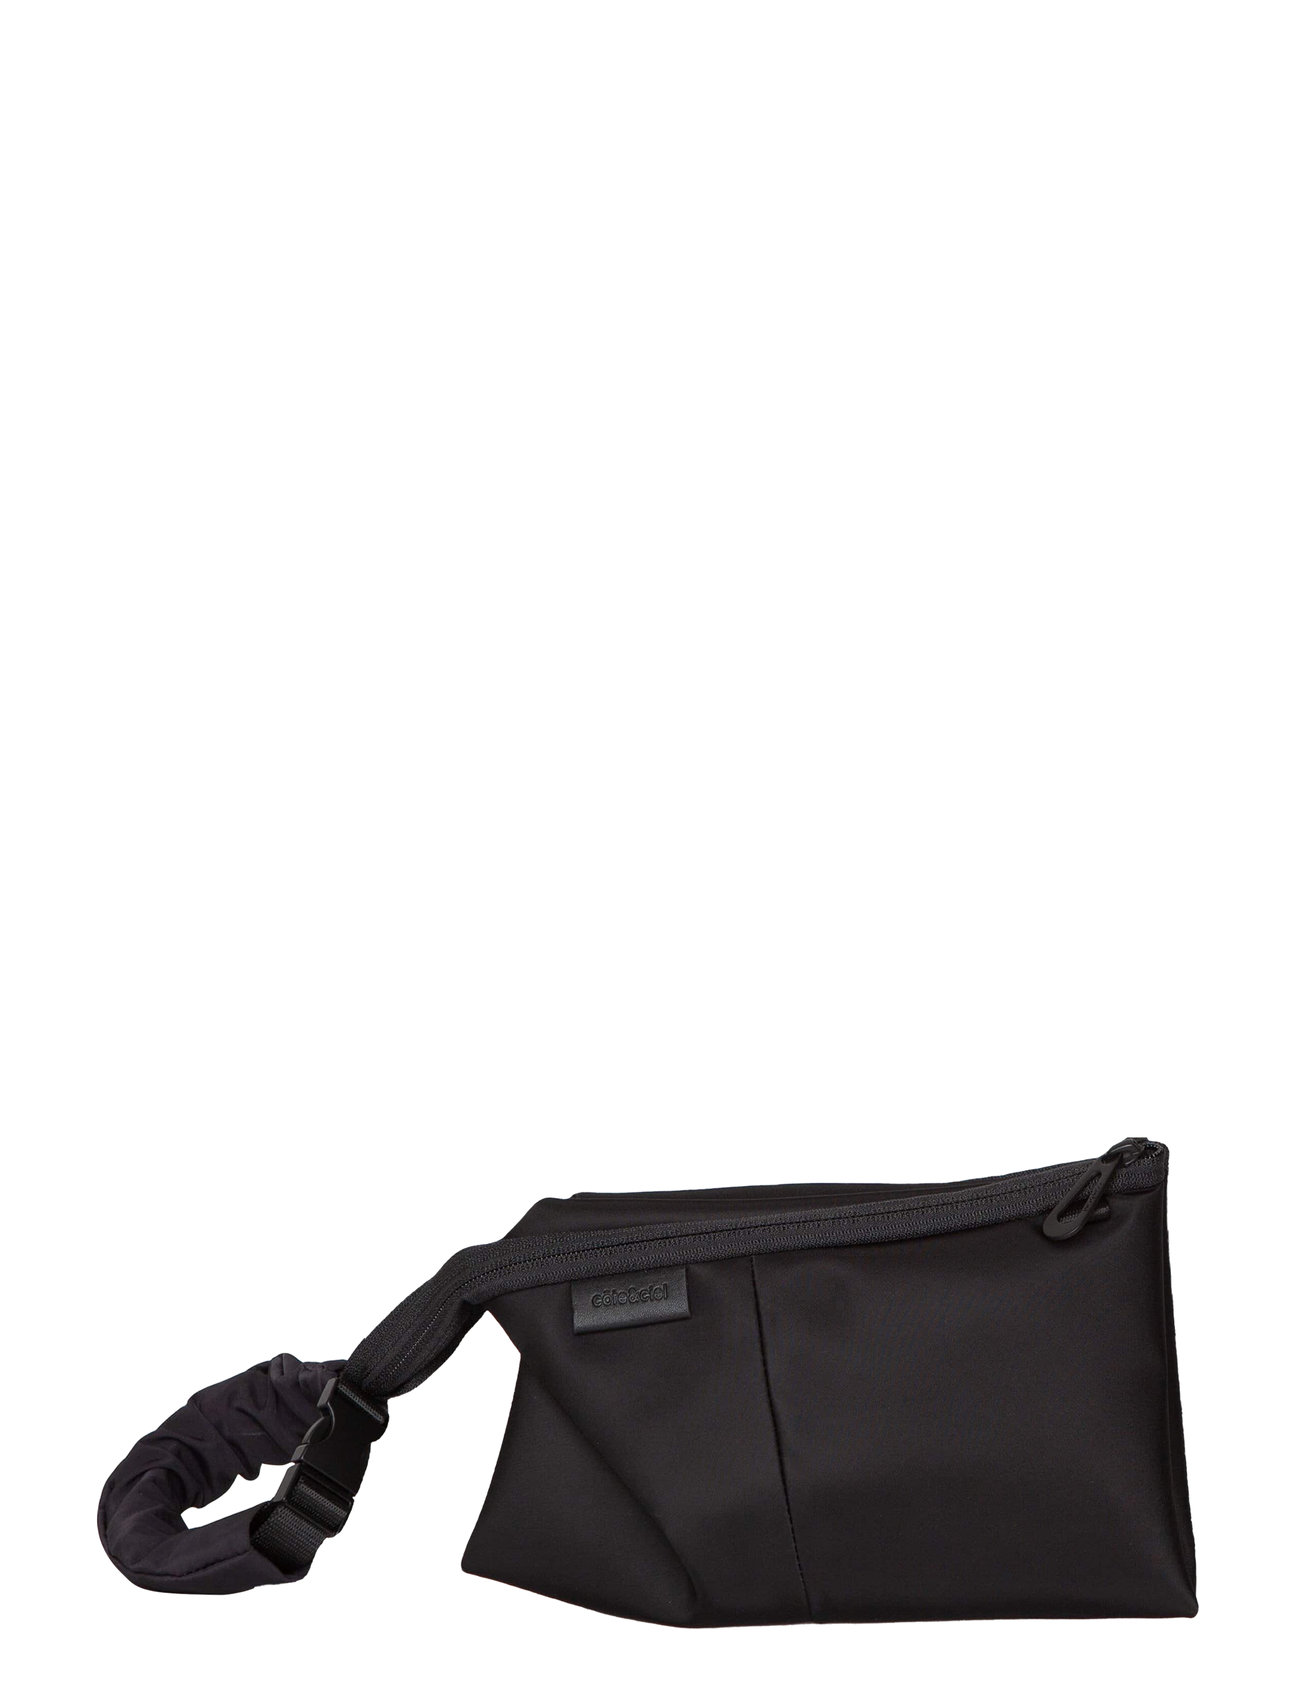 Côte & Ciel Kivu Small Sleek Nylon Black - Bum bags - Boozt.com